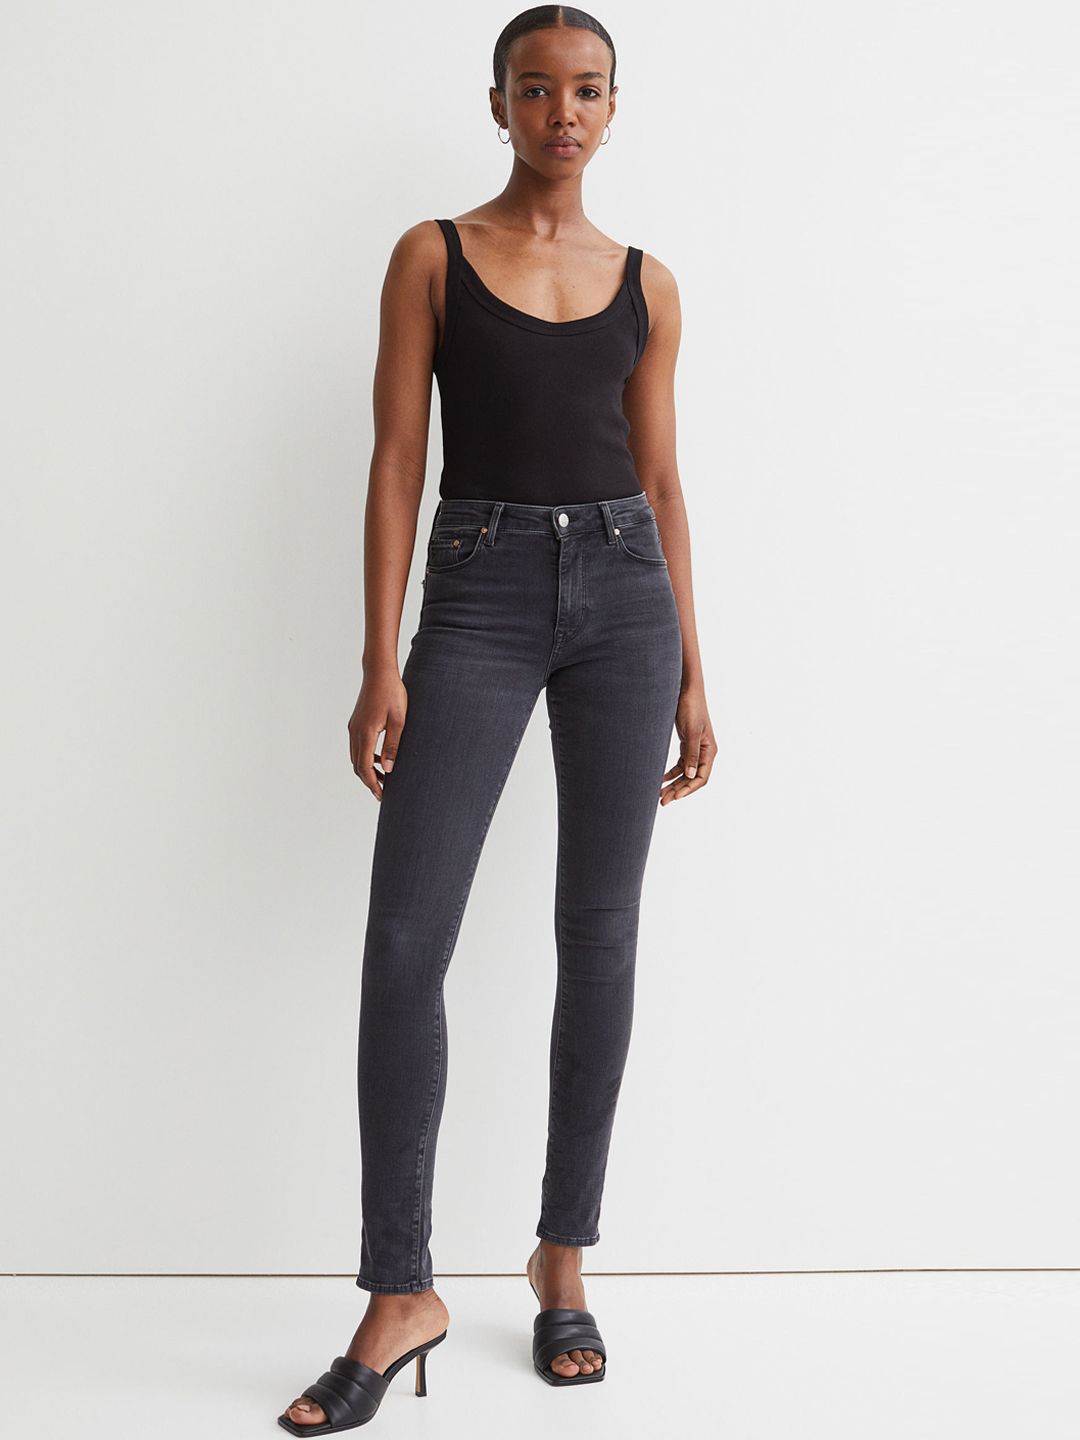 H&M Women Black Shaping Skinny Regular Jeans Price in India